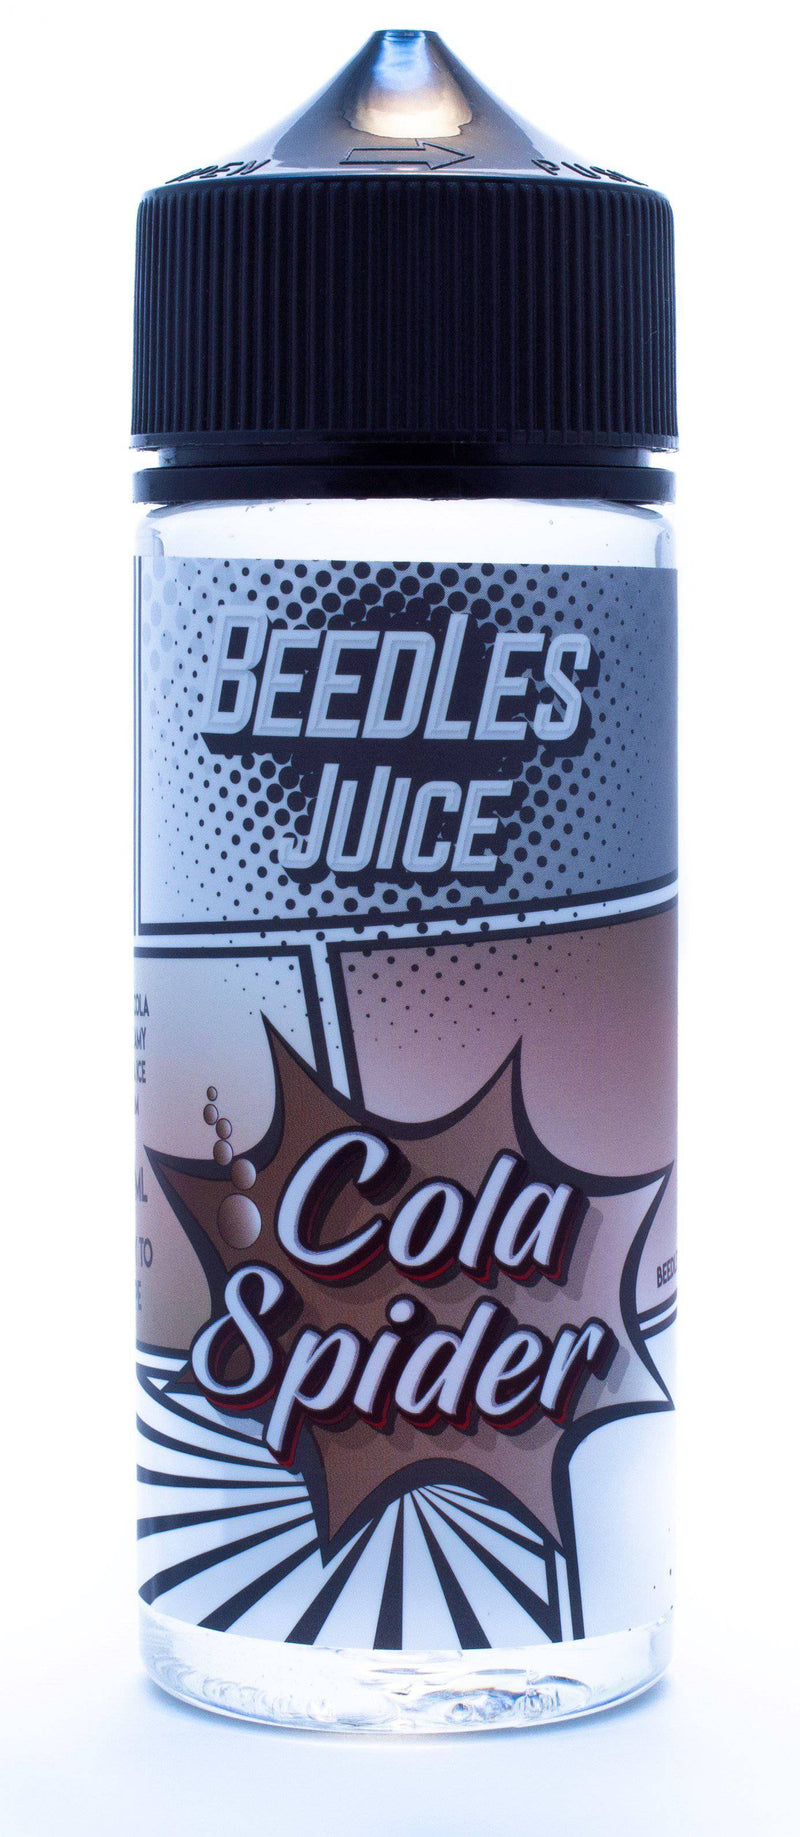 Beedlesjuice - Cola Spider - Super Vape Store